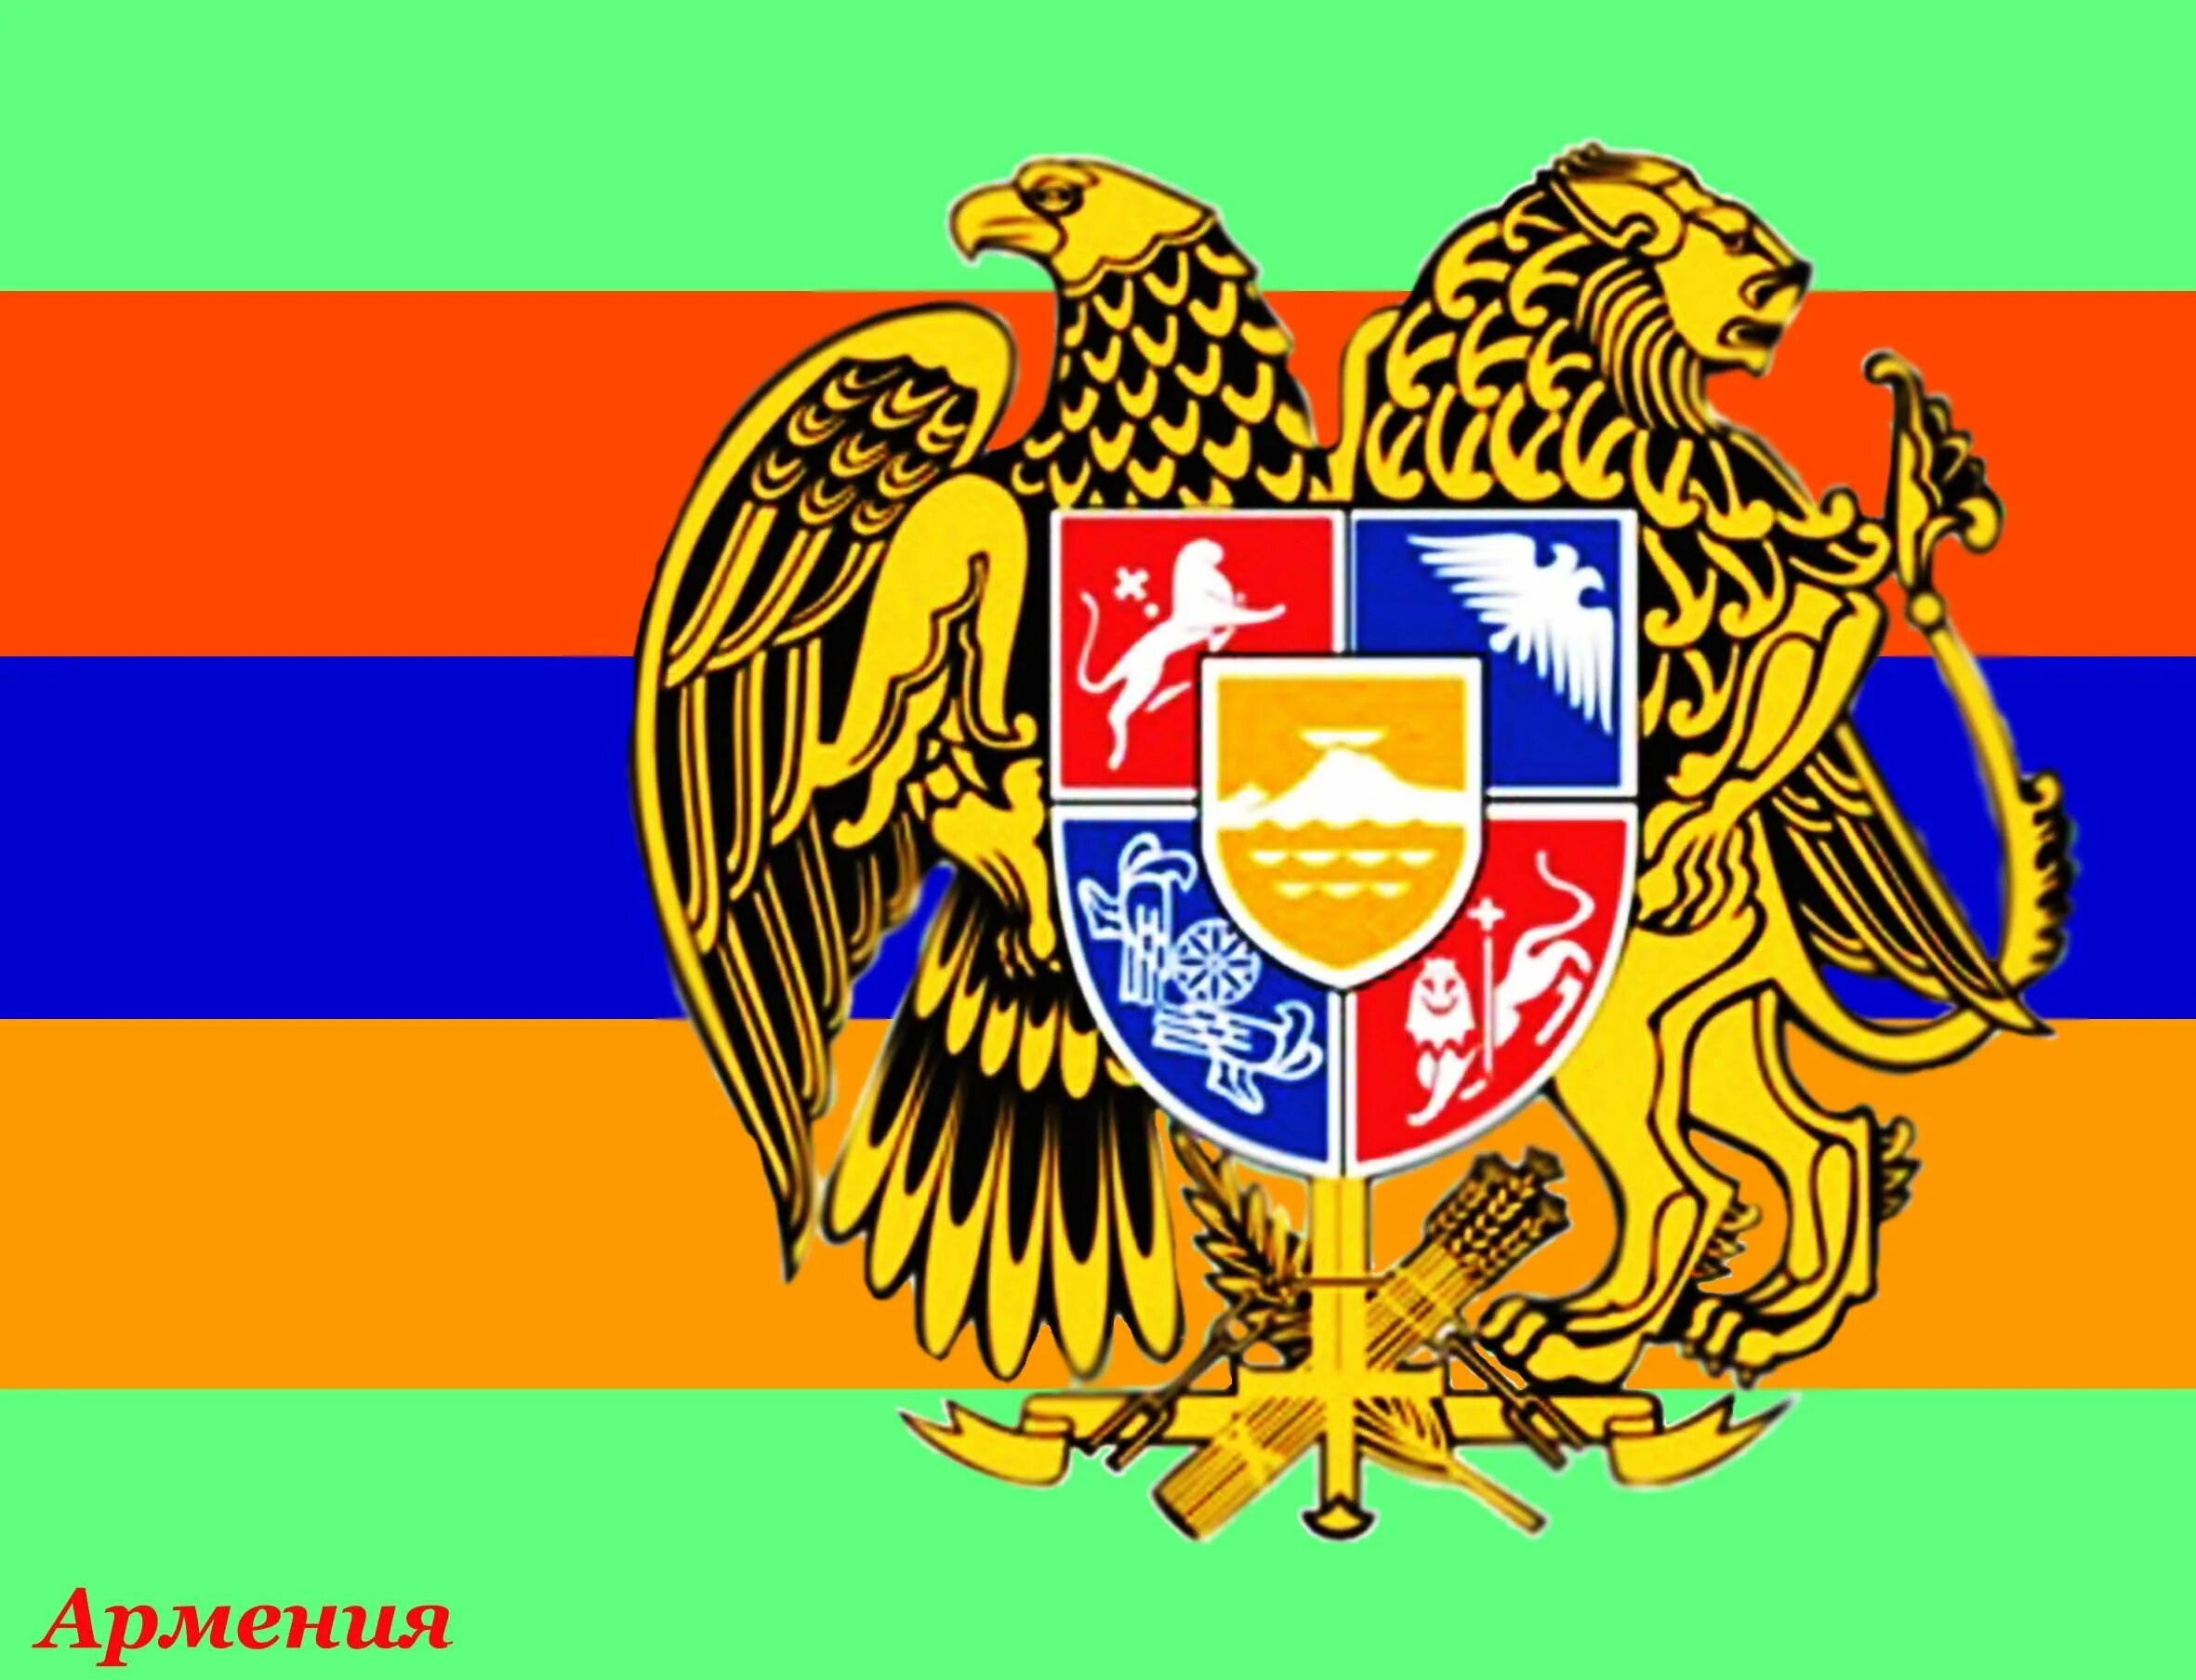 S armenia. Герб Республики Армения. Республика Армения флаг и герб. Армянский флаг и герб. Флаг первой Республики Армении.